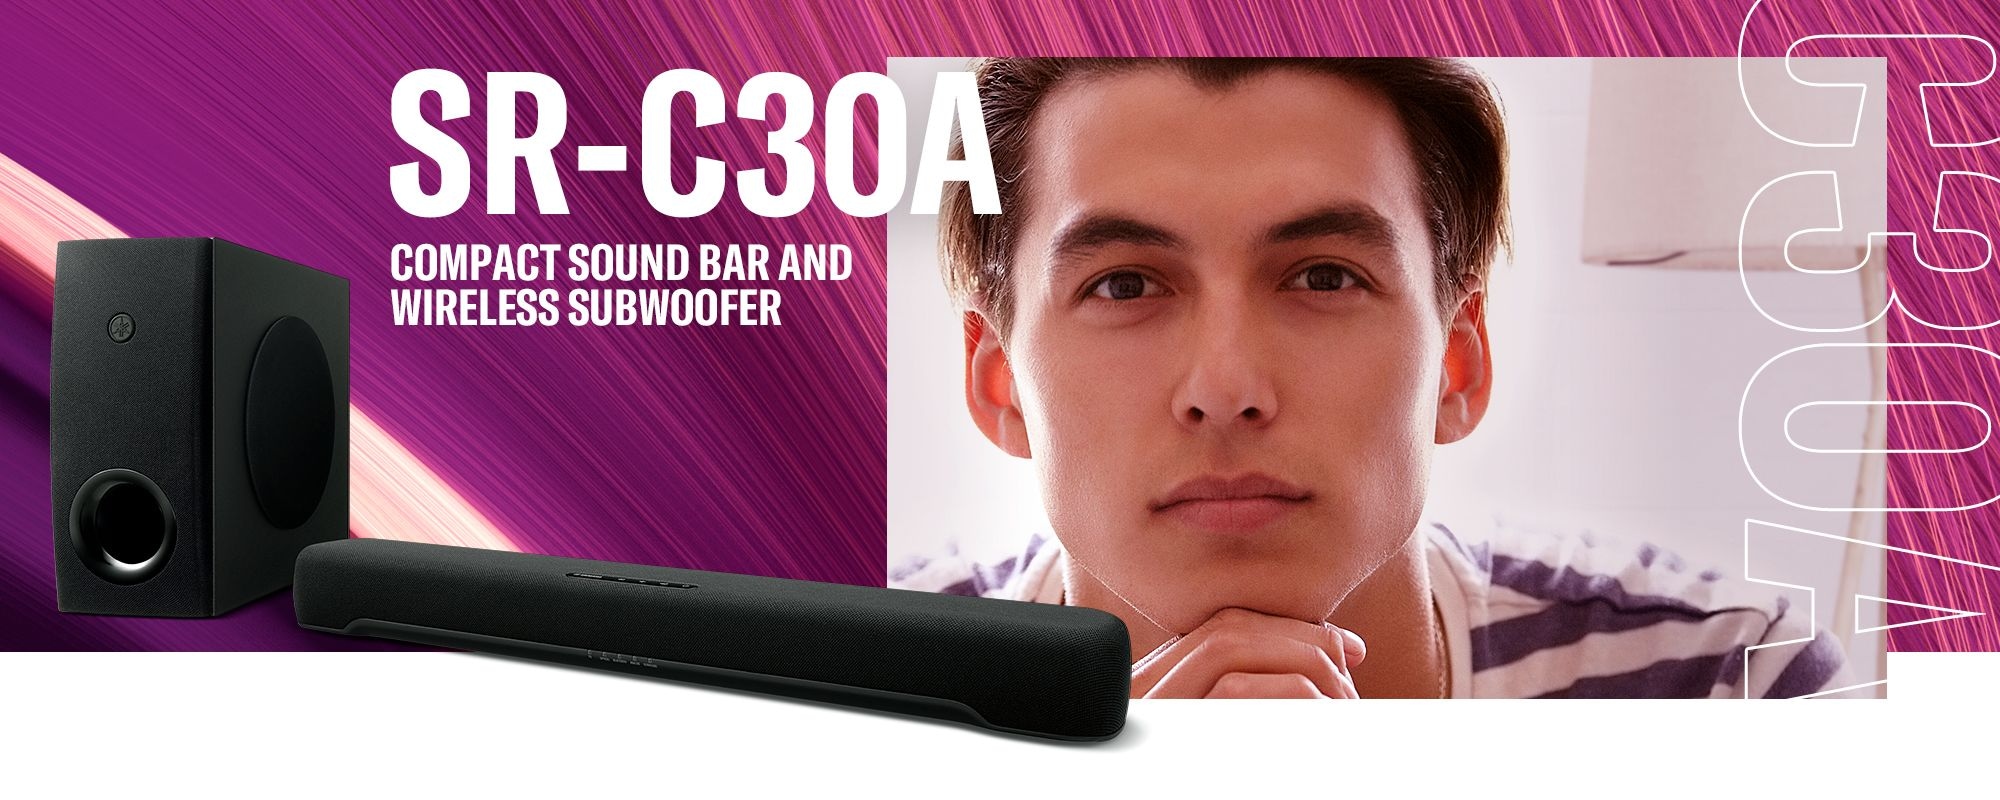 Bar USA Compact & SR-C30A Subwoofer Wireless - Sound Yamaha